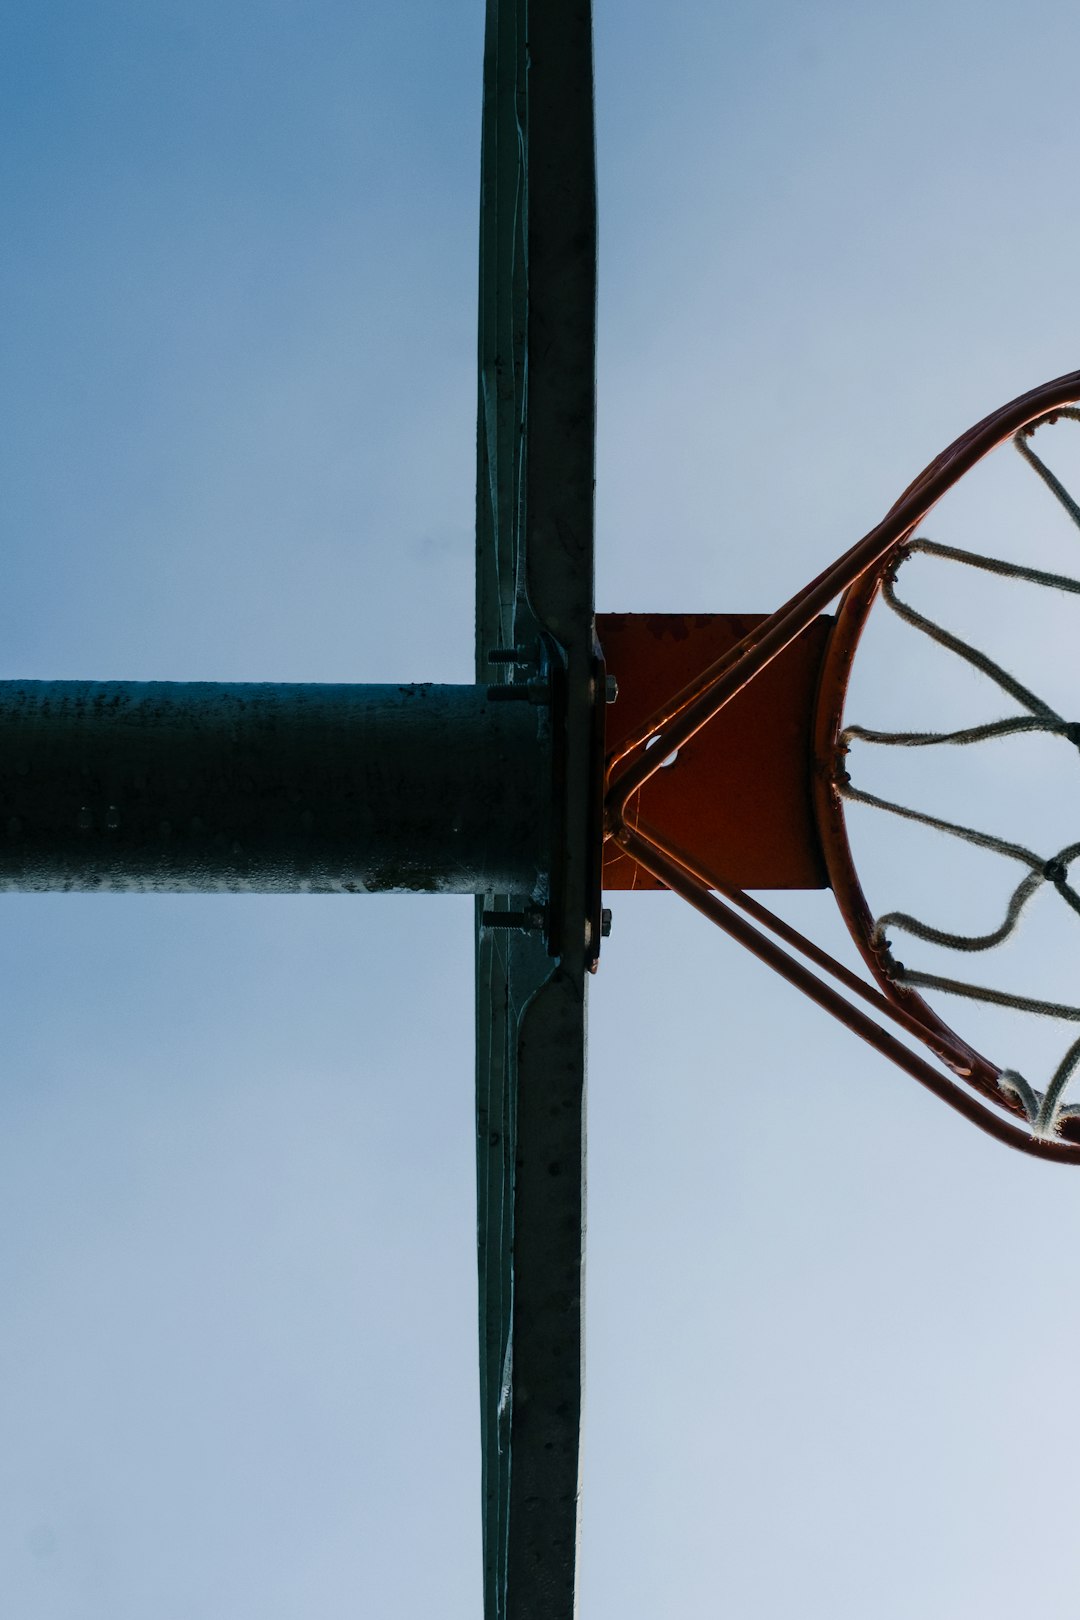 orange basketball hoop under blue sky